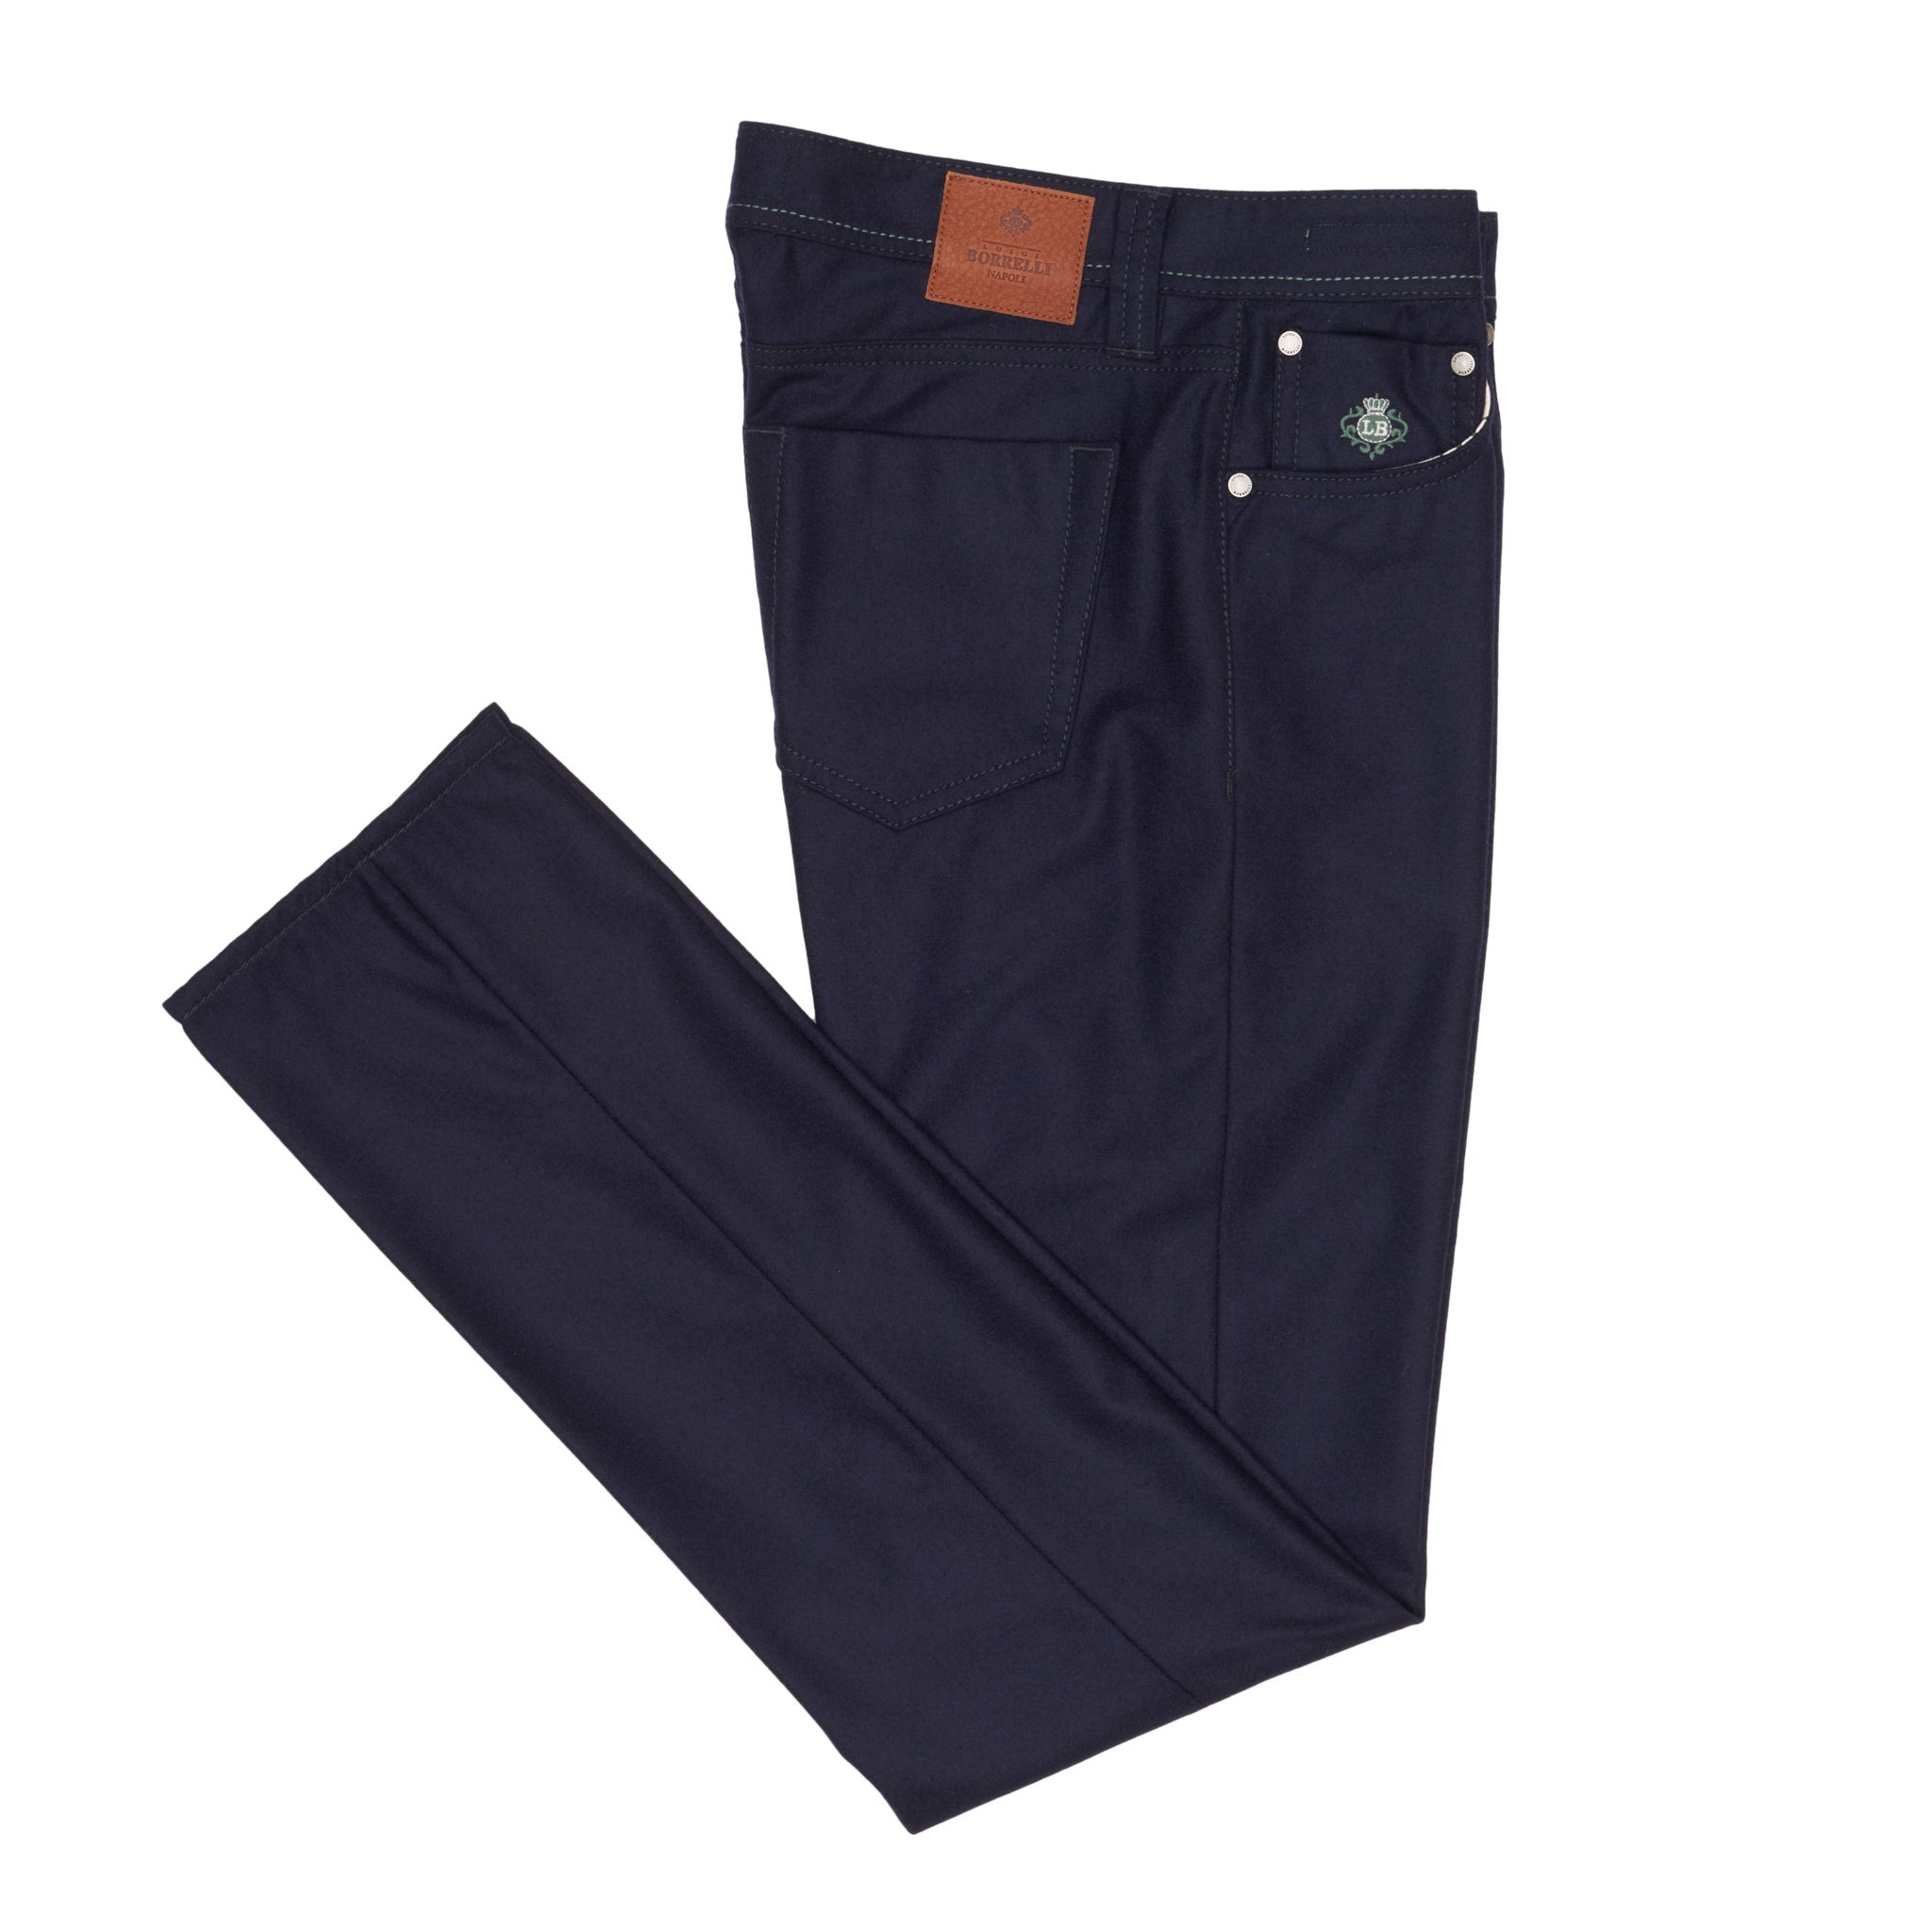 LUIGI BORRELLI Napoli "Caracciolo-LB" Navy Blue Wool Flannel Jeans Pants NEW LUIGI BORRELLI